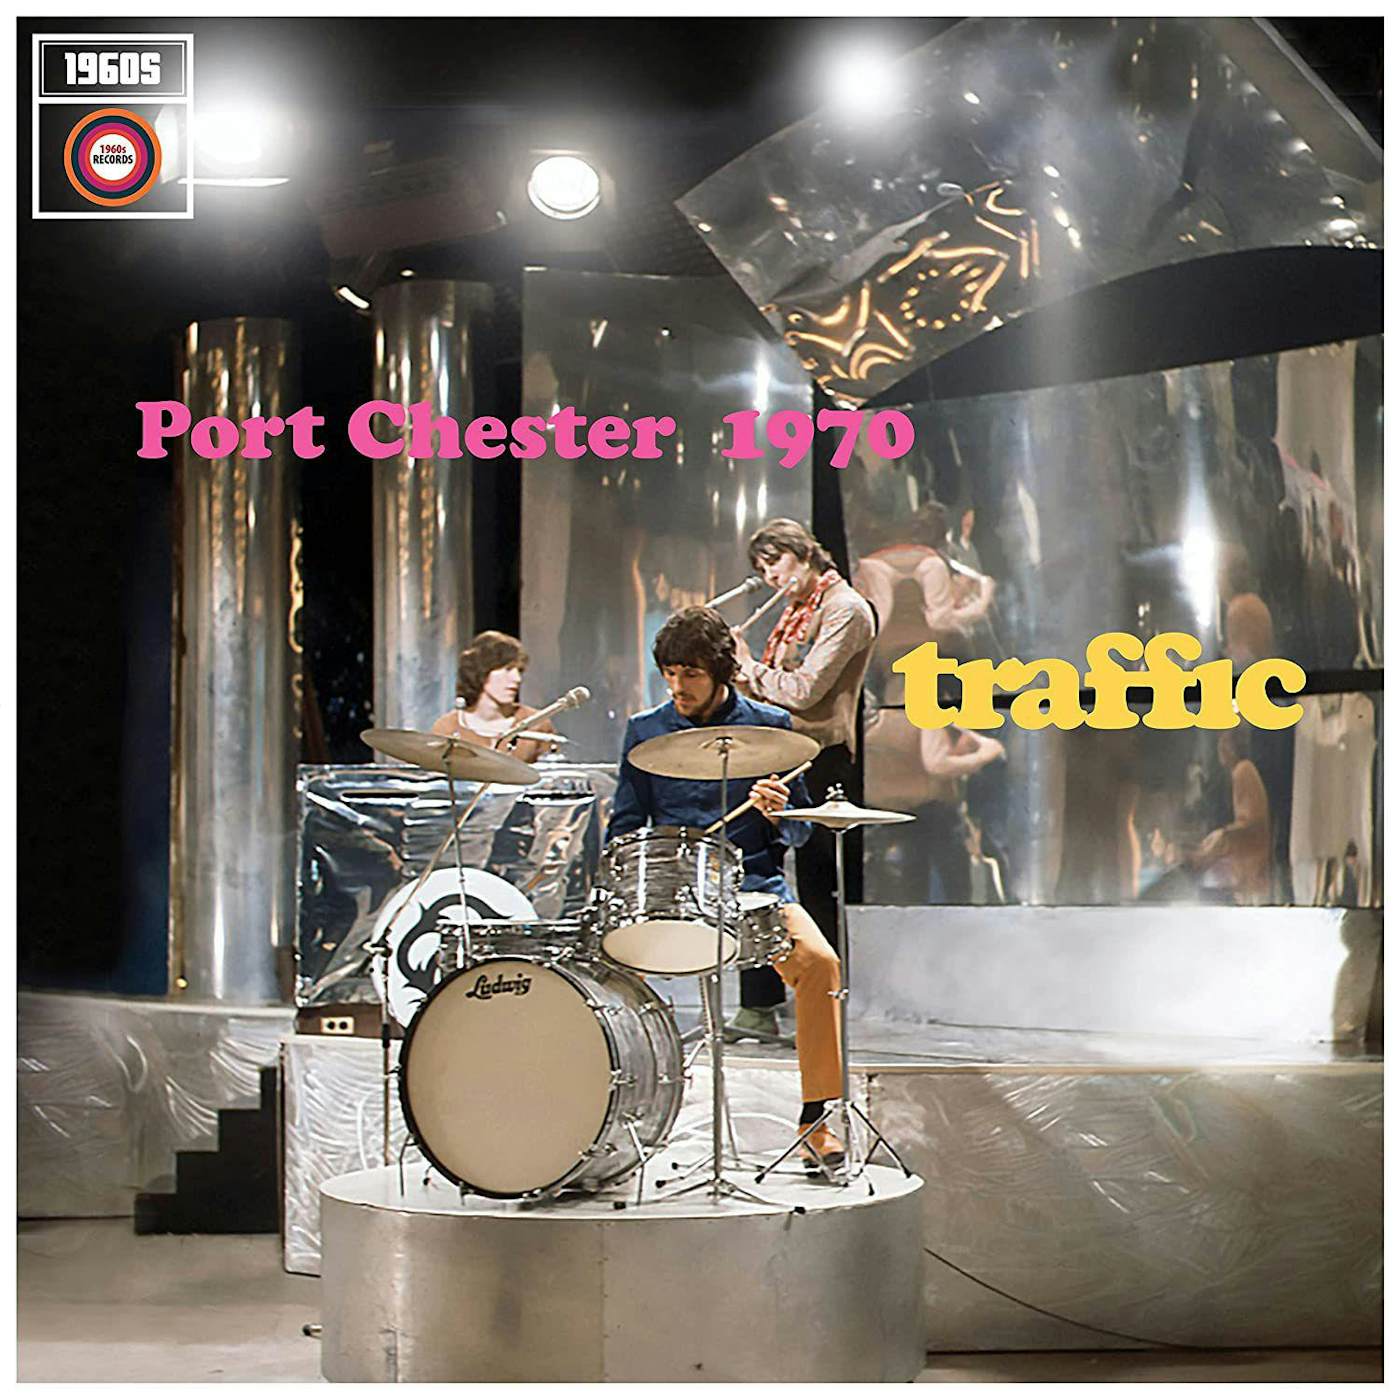 Traffic Port Chester 1970 Vinyl Record